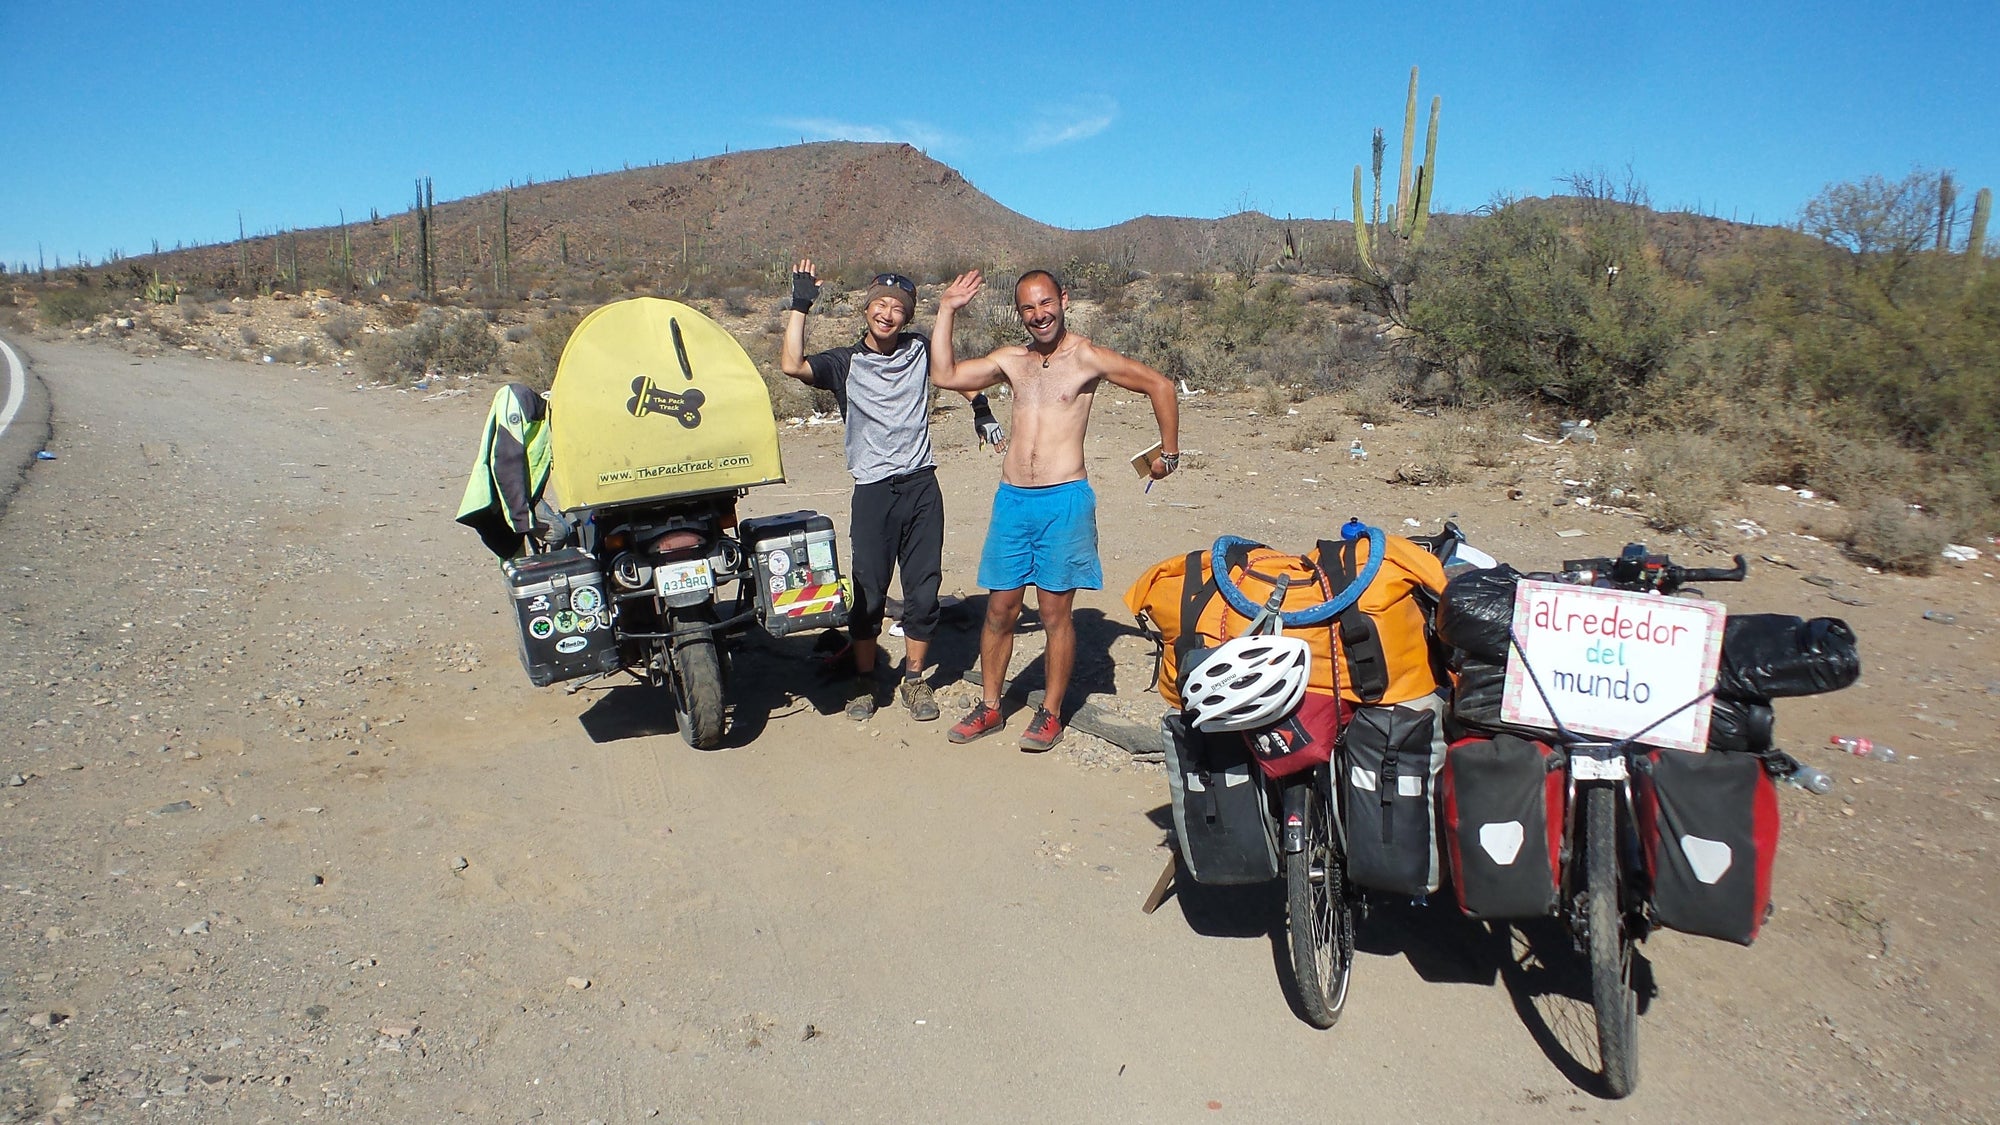 Janells Solo Ride through Baja